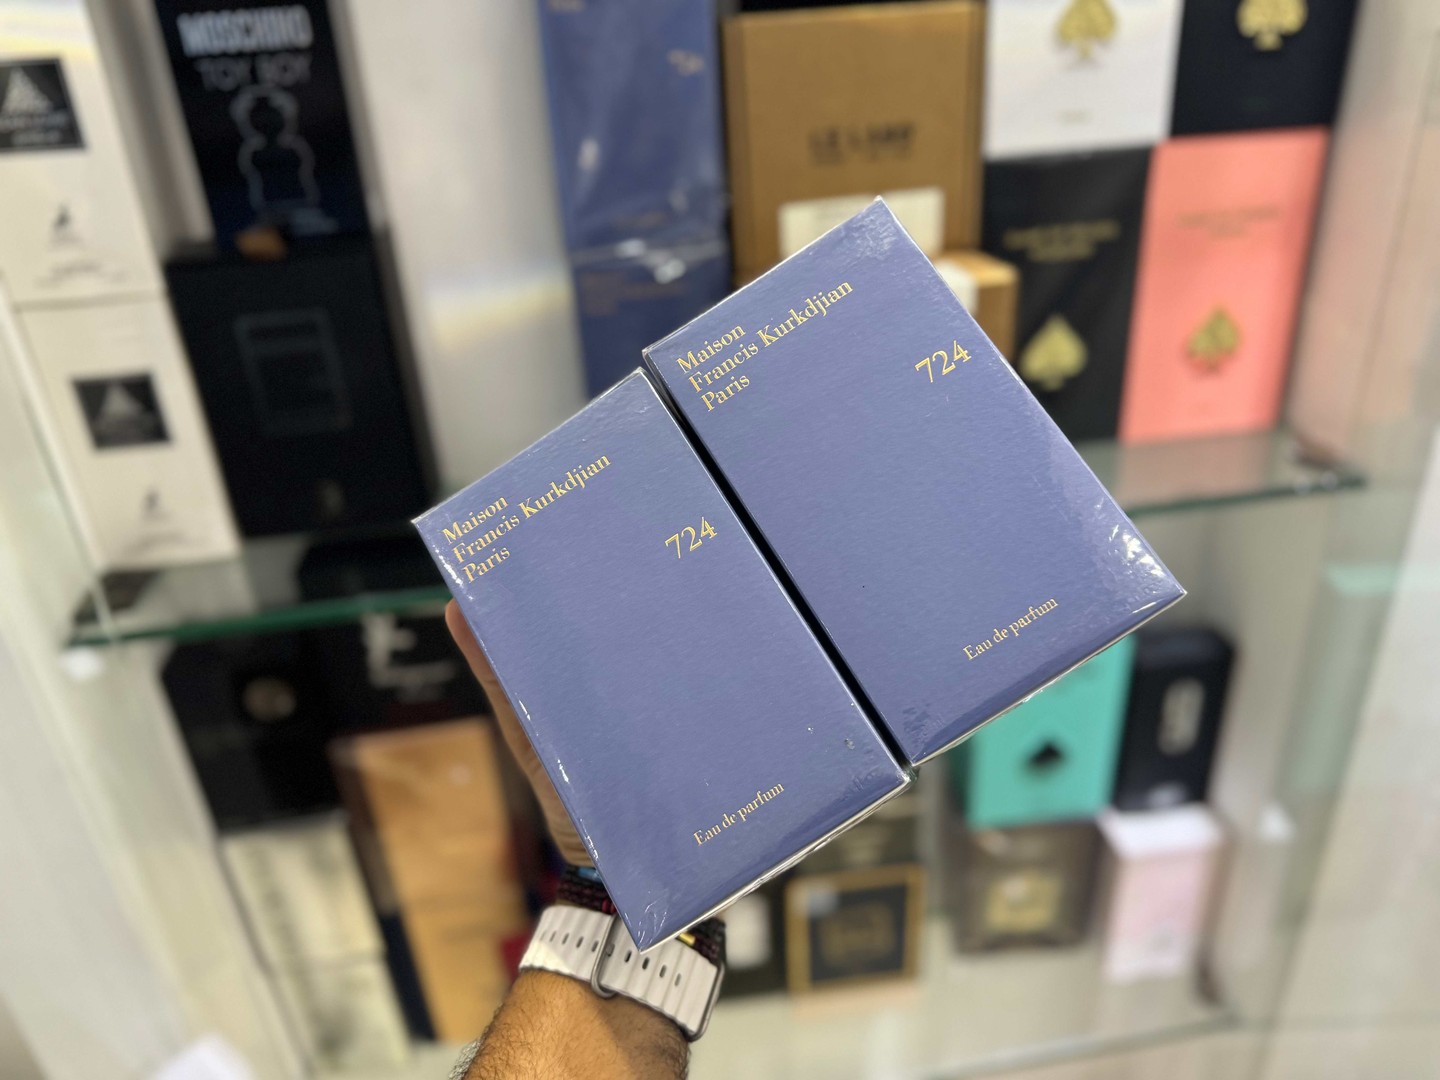 joyas, relojes y accesorios - Perfumes Maison Francis Kurkdjian Paris 724 Nuevos 70ml Originales $ 21,500 NEG 0